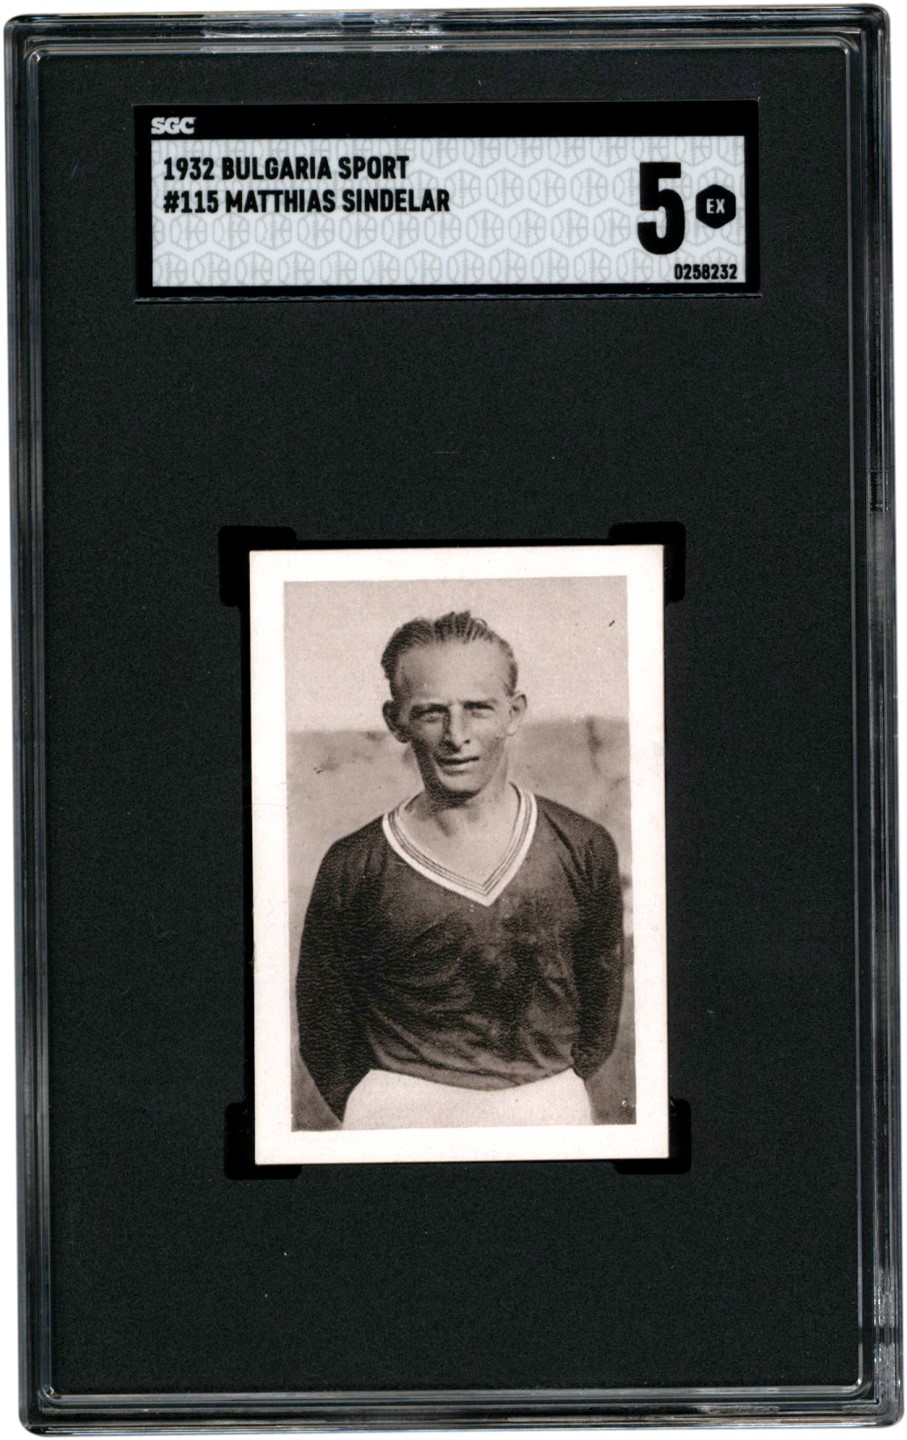 - 1932 Bulgaria #115 Matthias Sindelar Rookie Card SGC EX 5